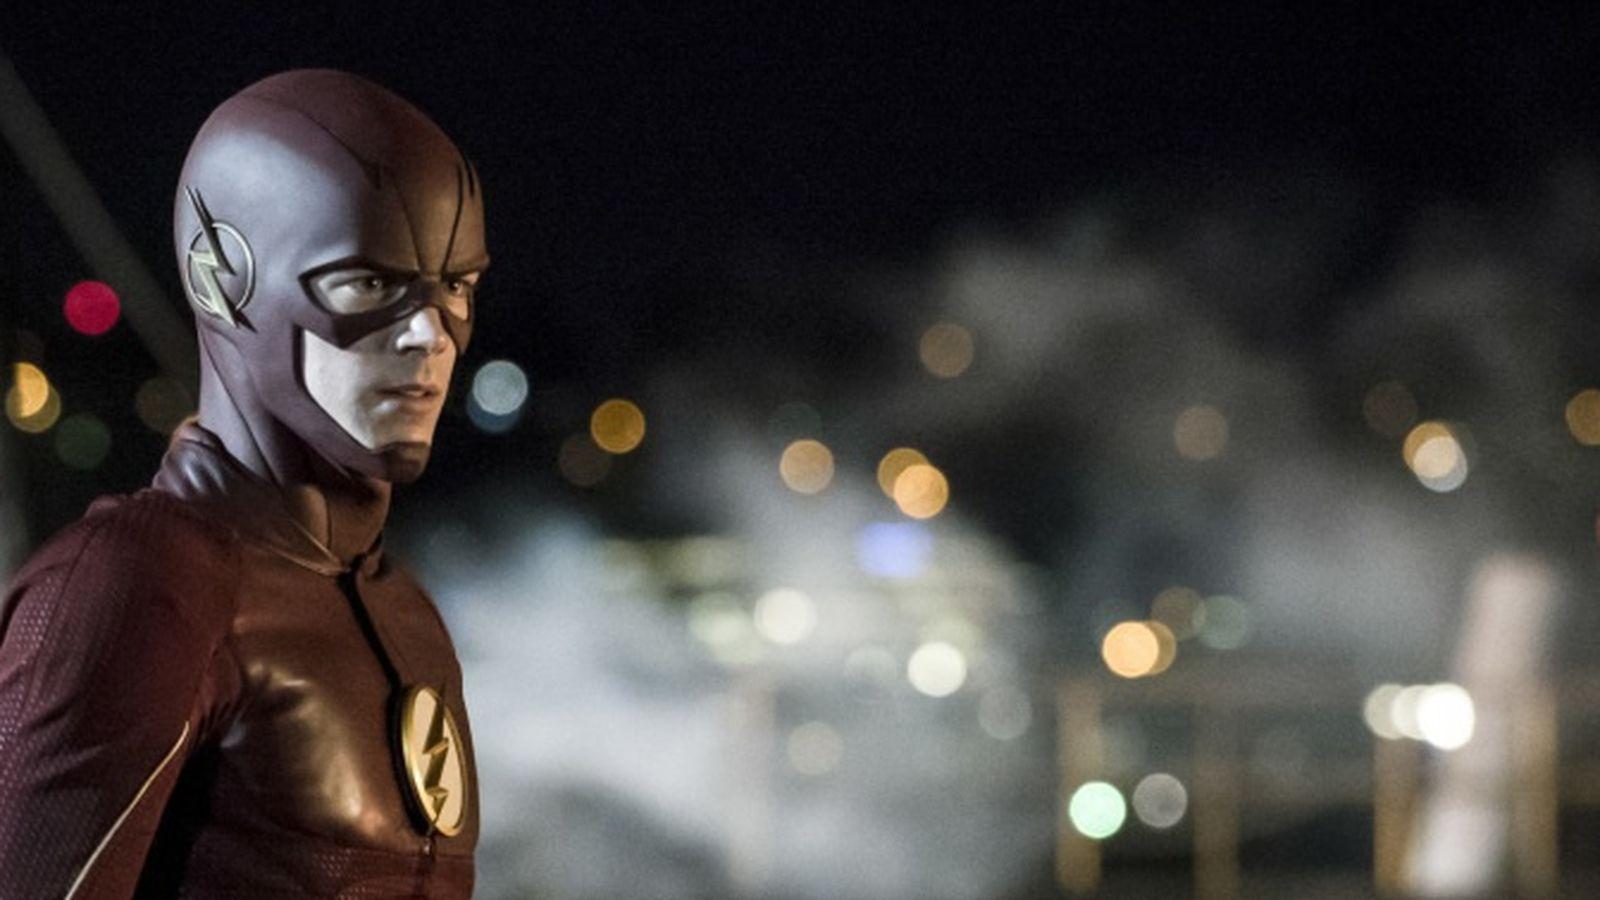 The Flash' season episode 6 unveils major new villain Savitar